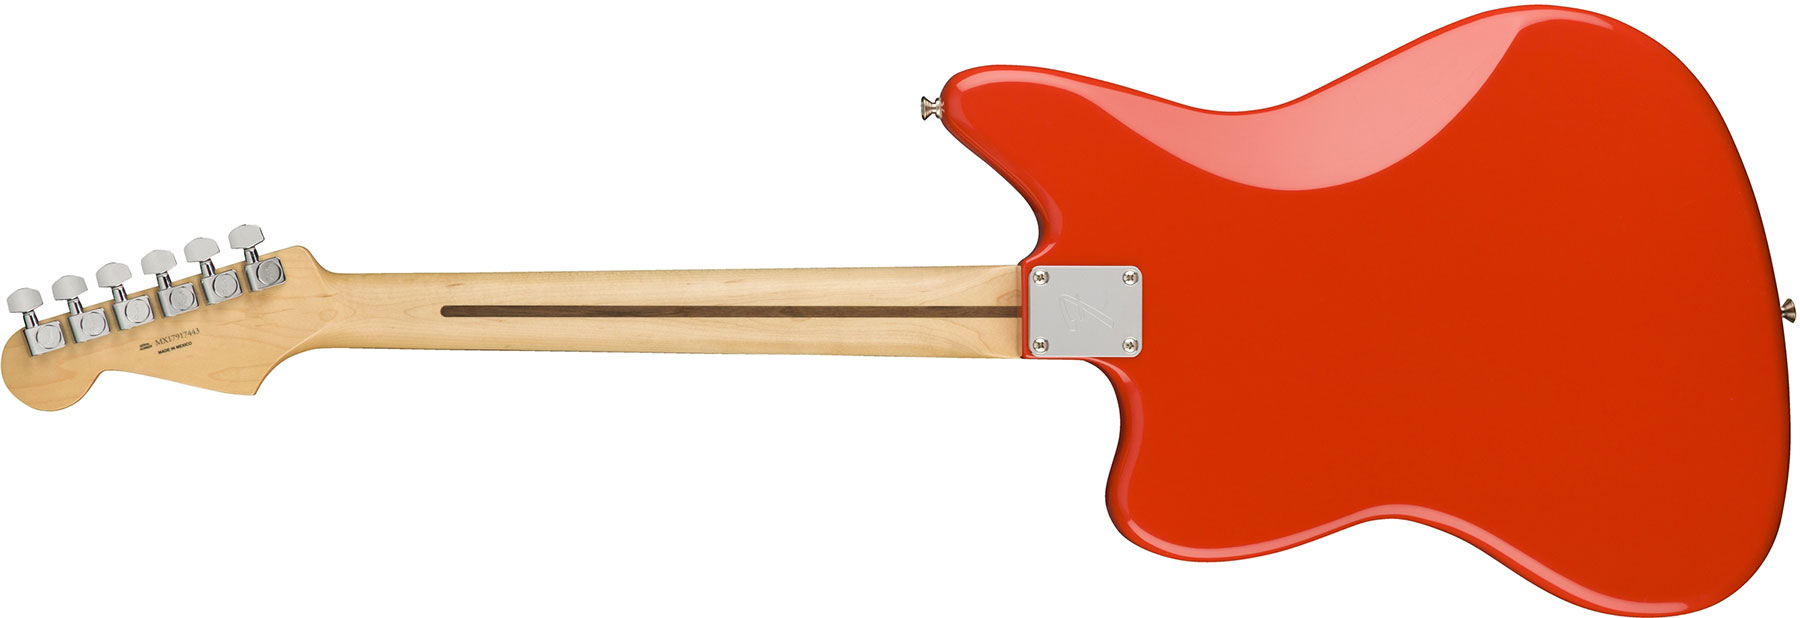 Fender Jaguar Player Mex Hs Pf - Sonic Red - Retro rock electric guitar - Variation 1